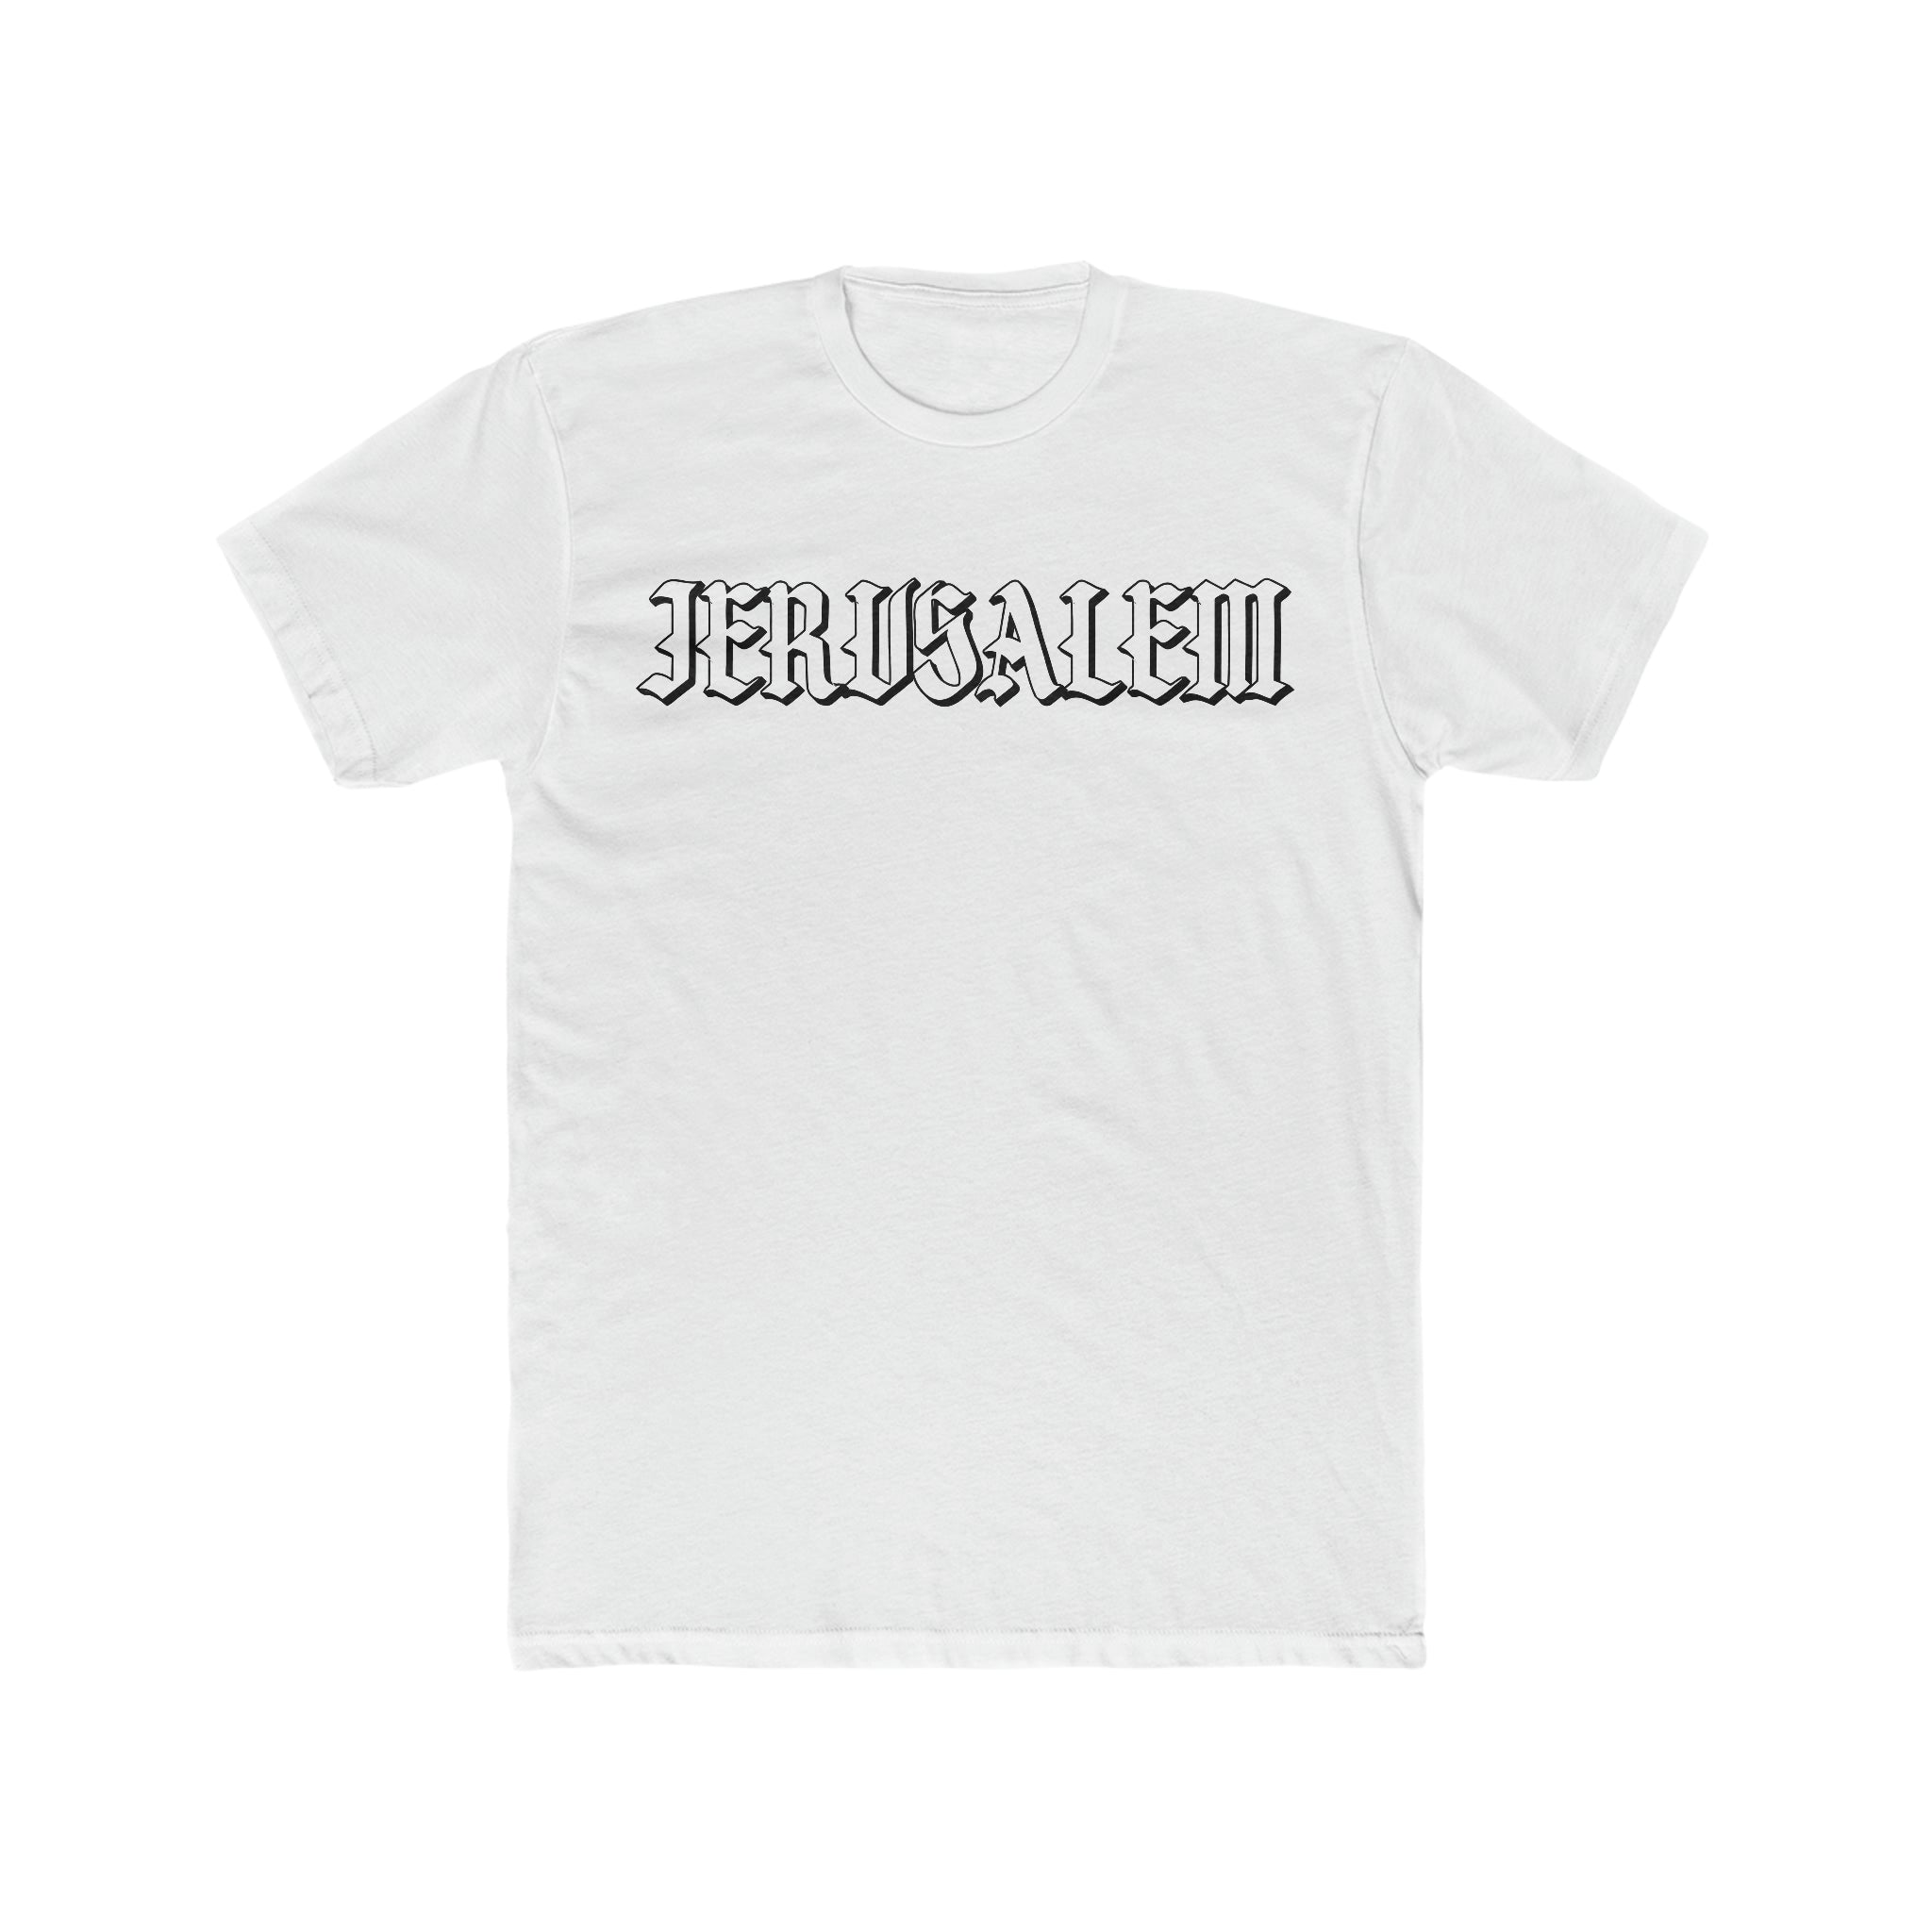 NEW JERUSALEM TEE 1